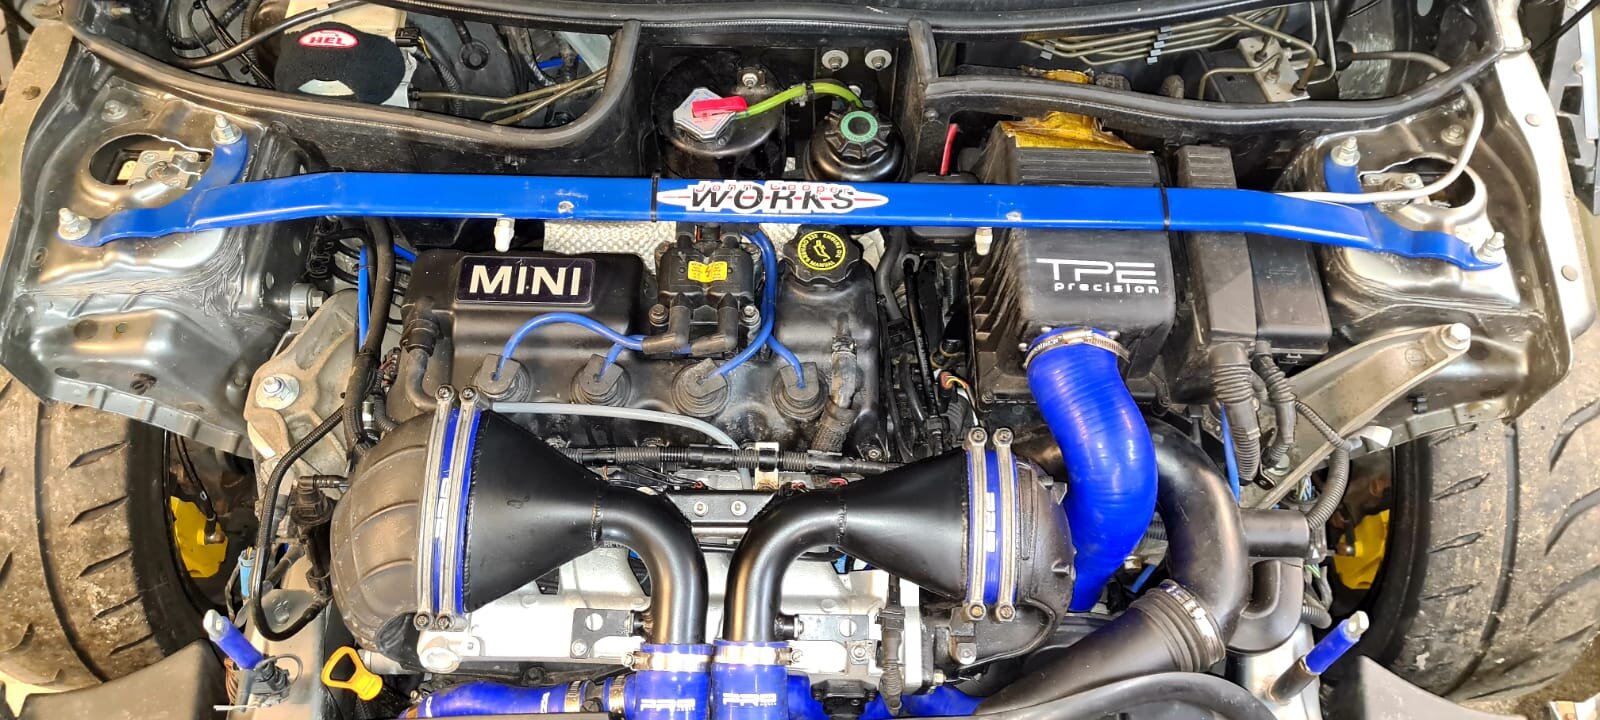 Charlies Race Mini Engine Build Airtec Intercooler, 1320 mini Tuned.jpeg